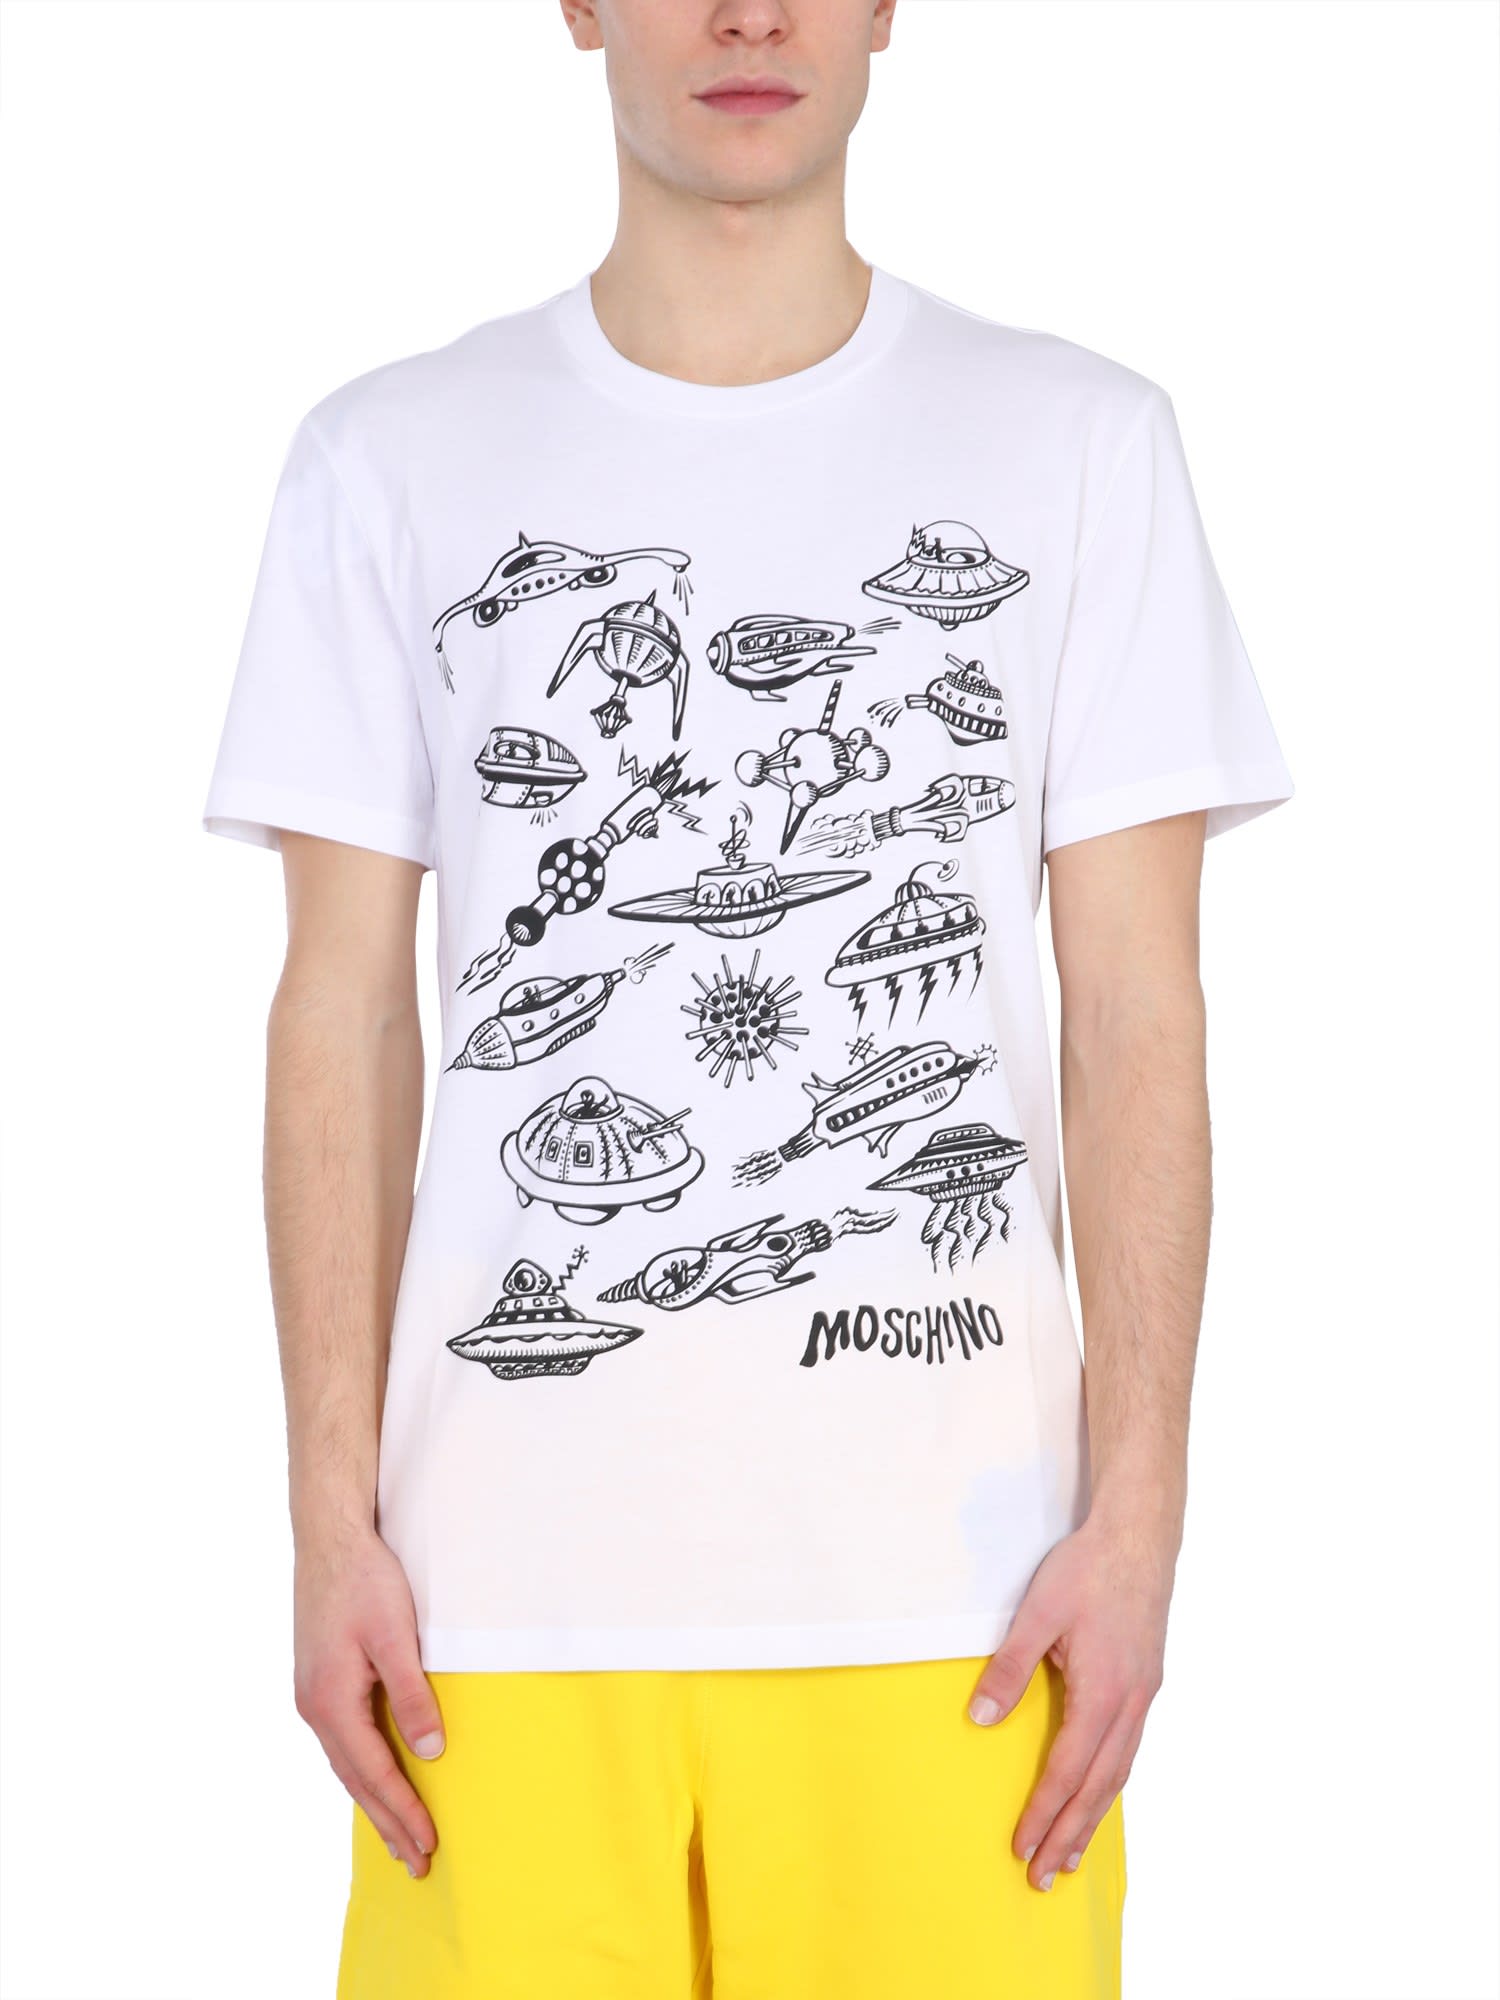 Moschino T-shirt With Spaceships Print